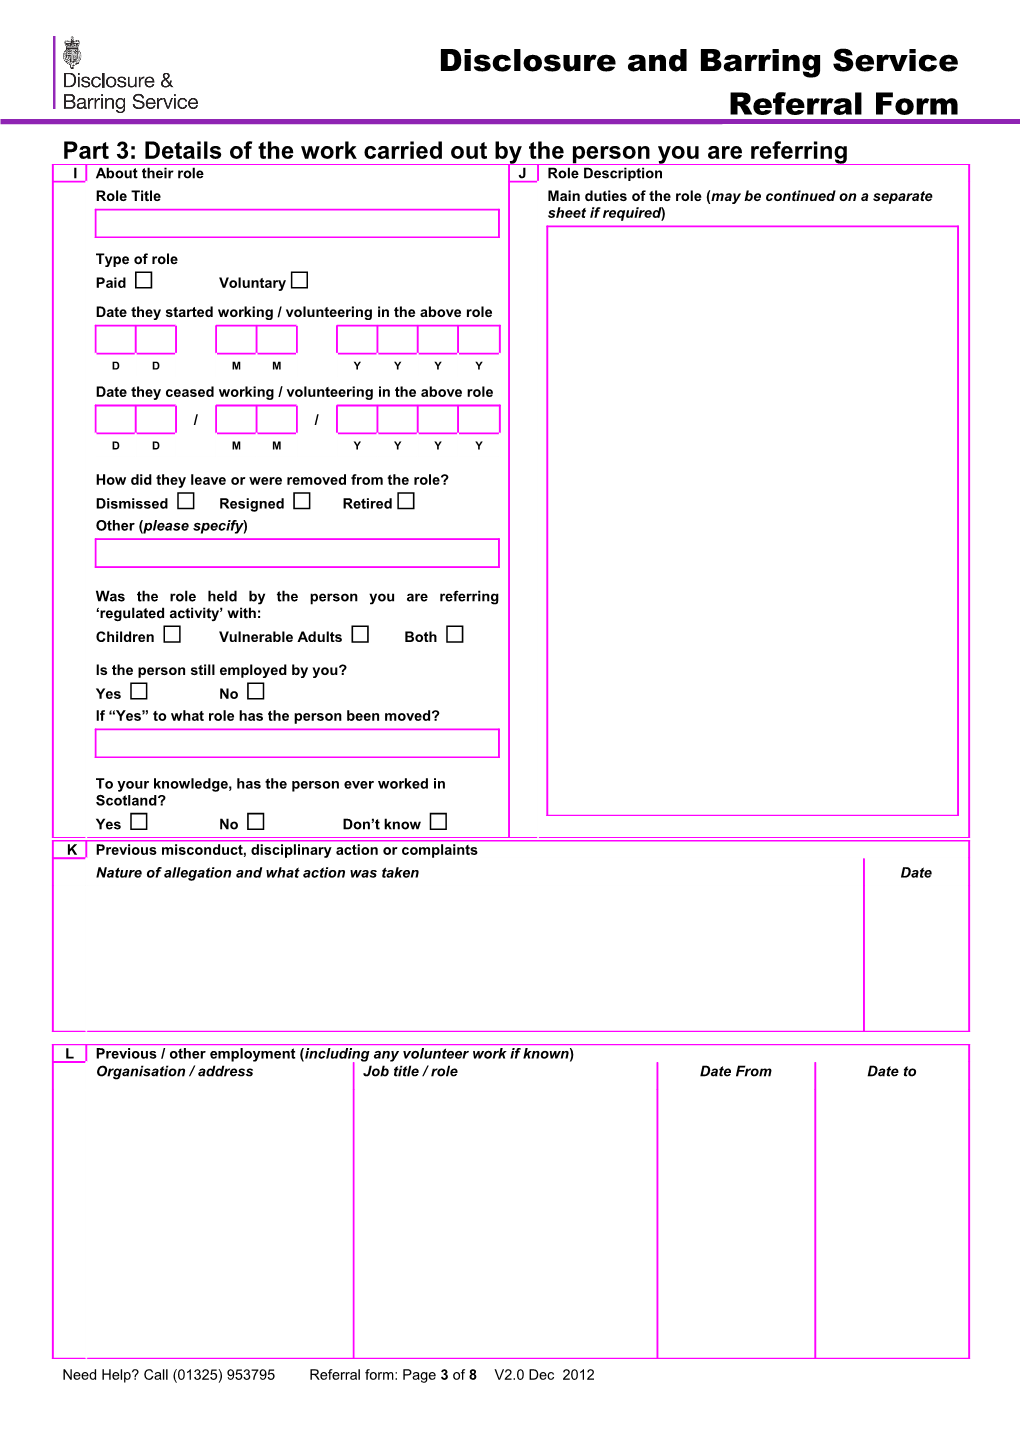 ISA Referral Form Version 2